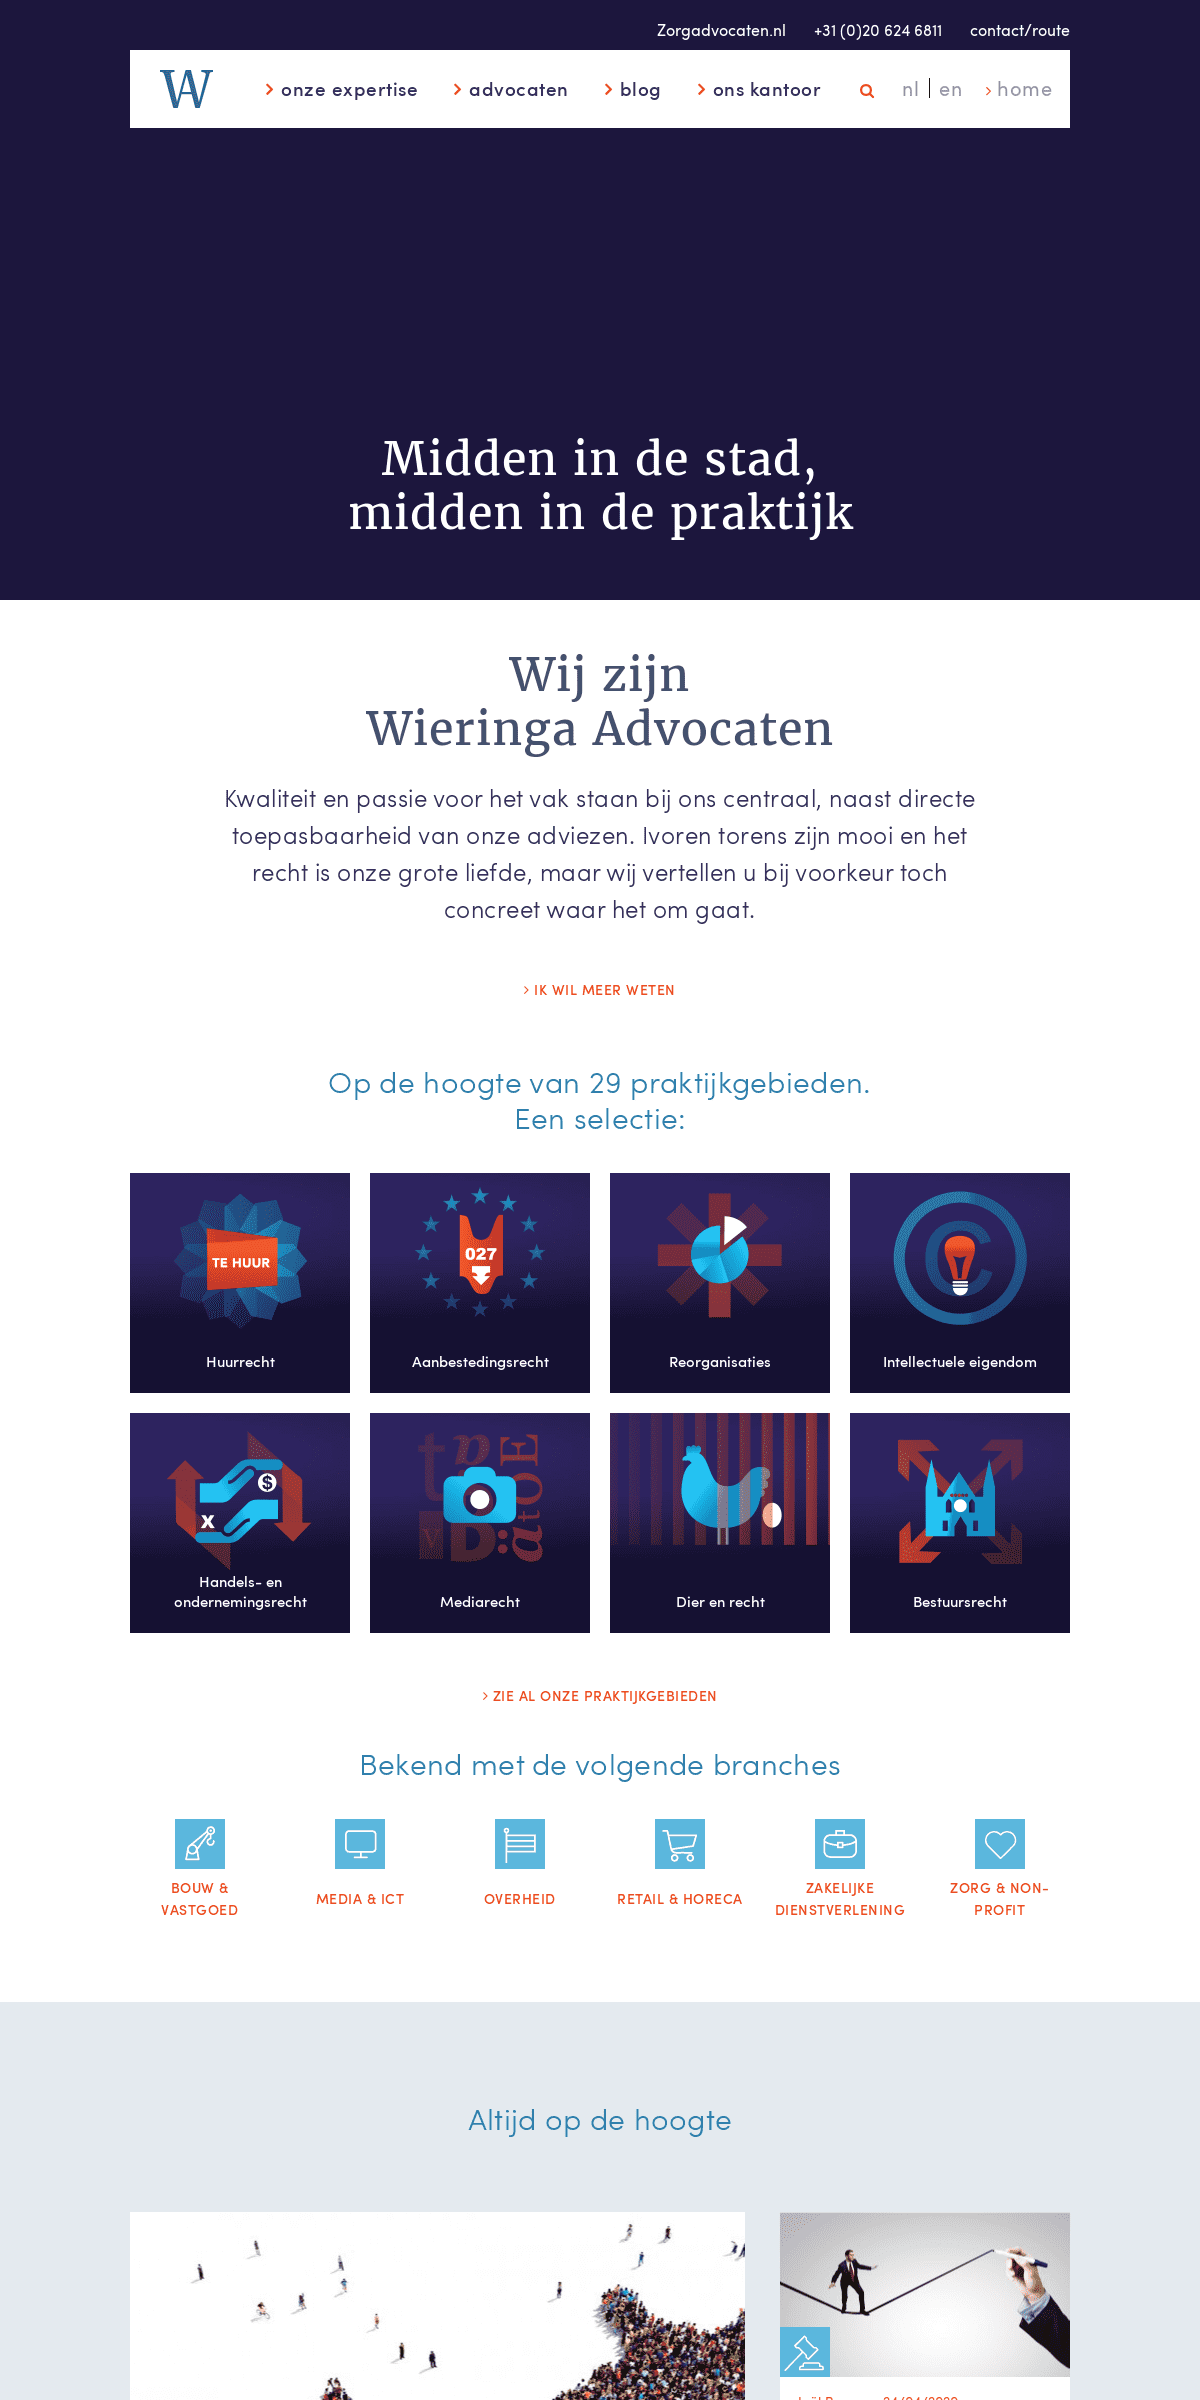 A complete backup of wieringa-advocaten.nl